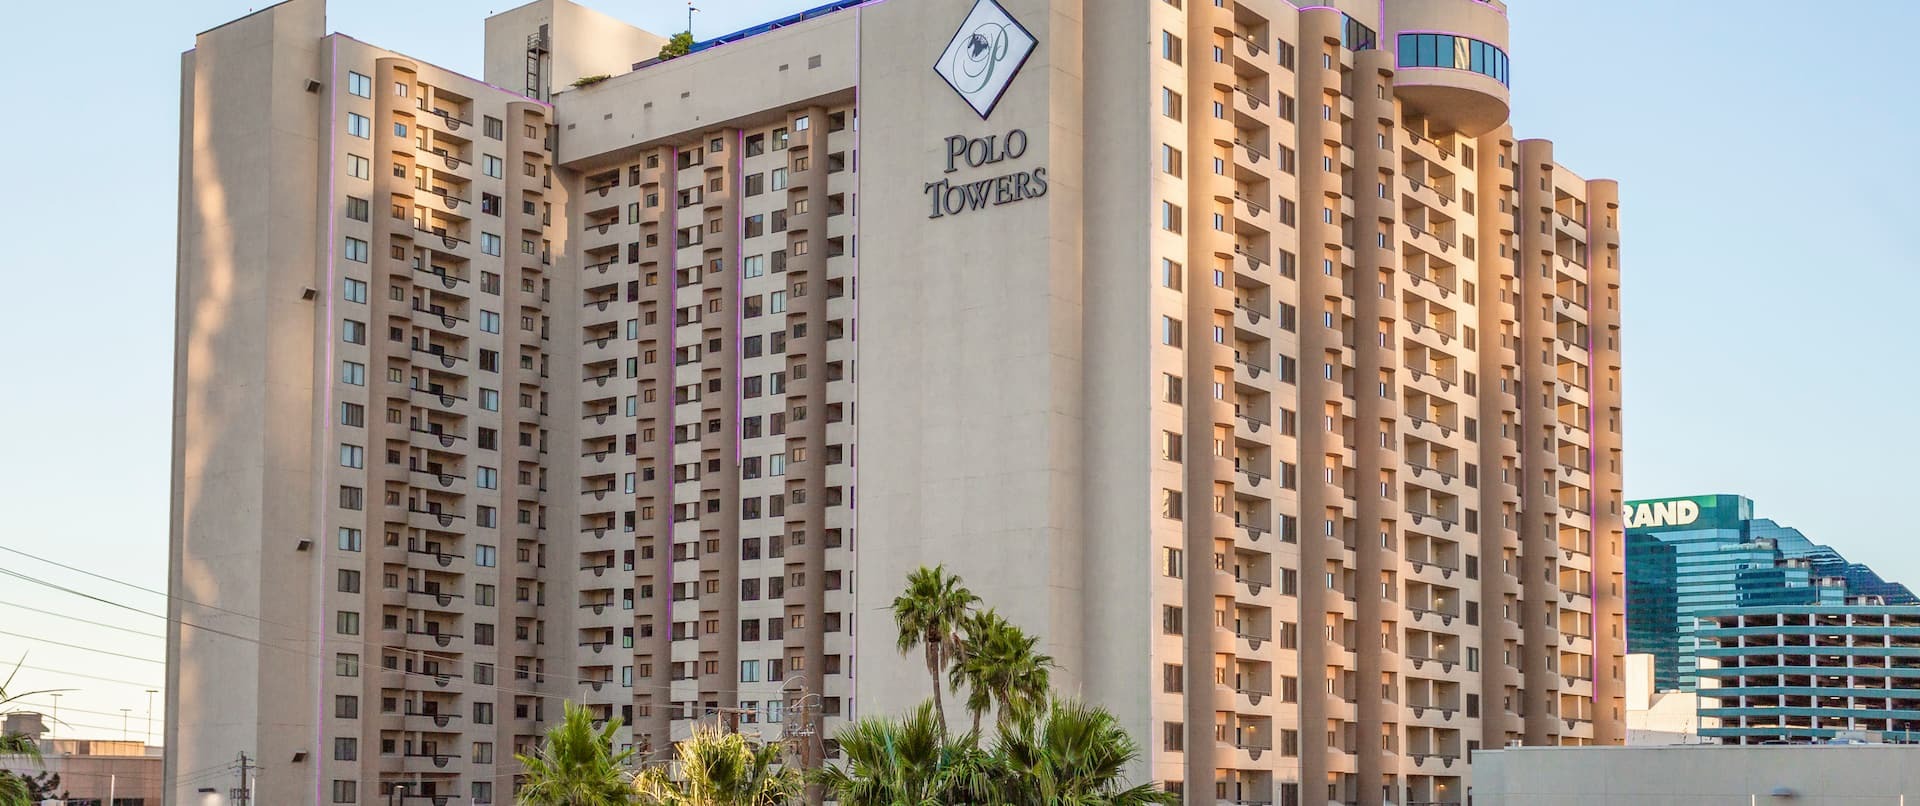 Photo of Polo Towers, a Hilton Vacation Club, Las Vegas, NV